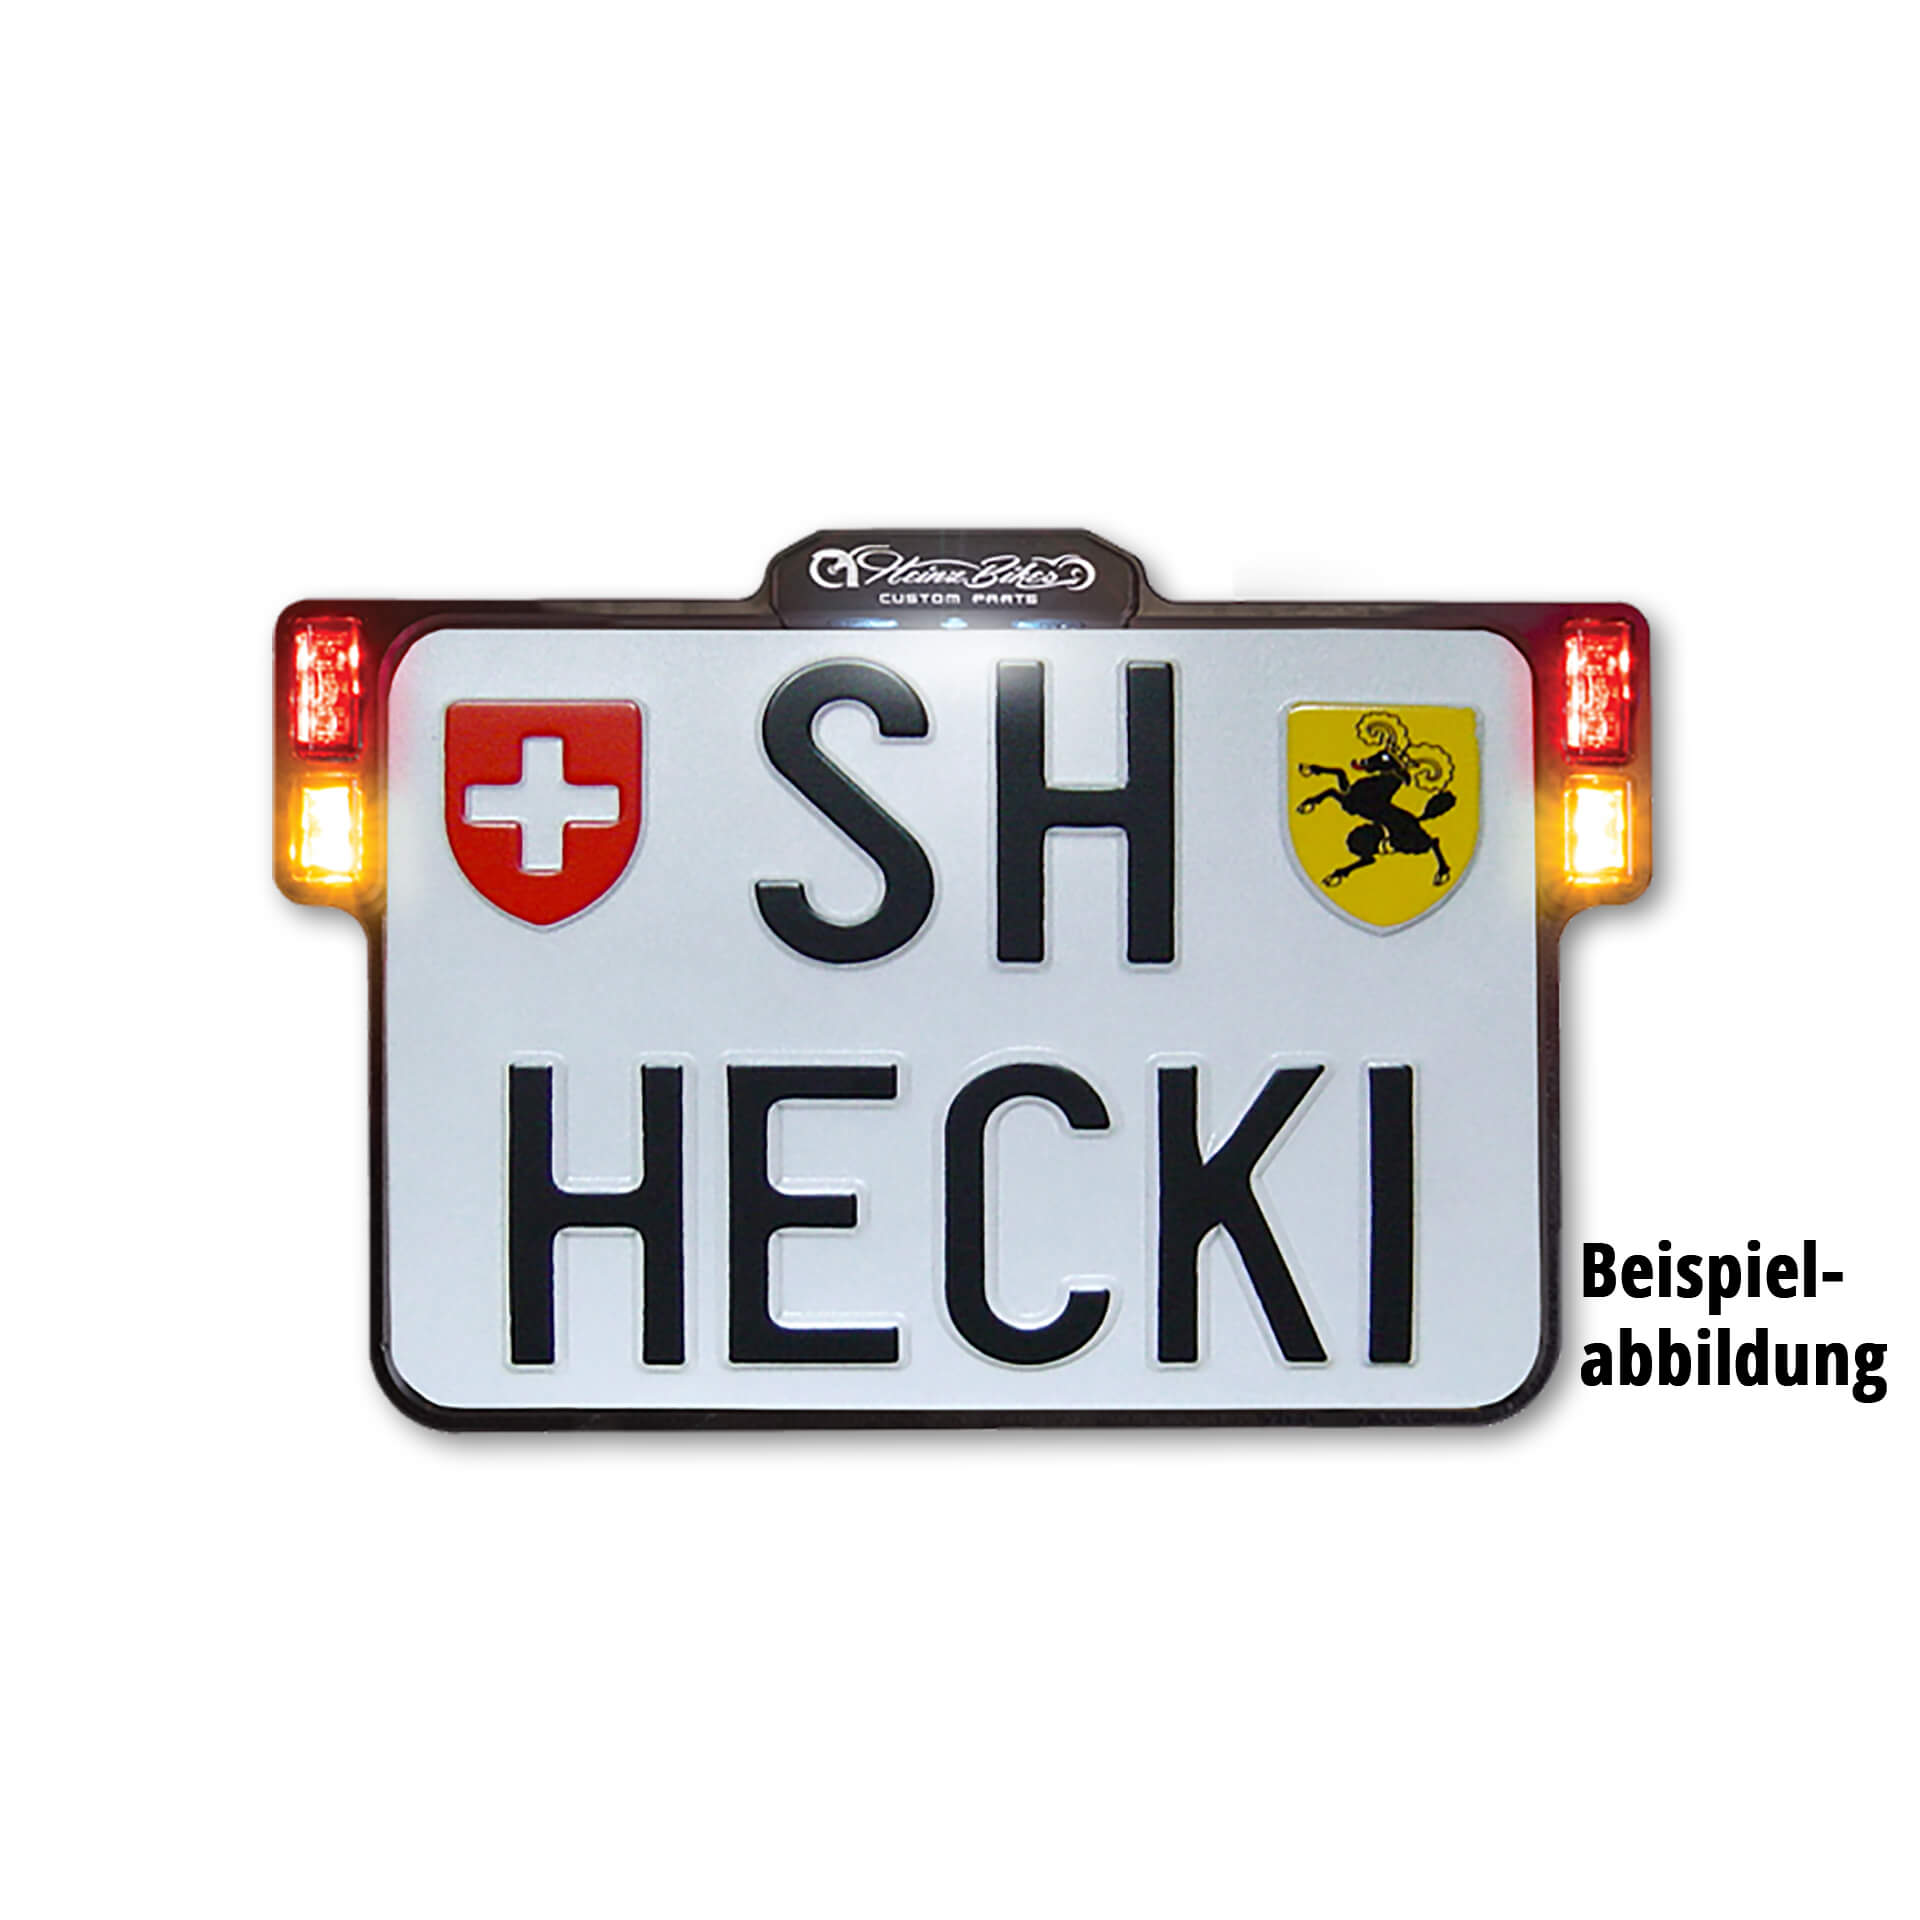 heinzbikes ALL-INN 2.0 License plate holder with KNZ lighting 3in1, CHE